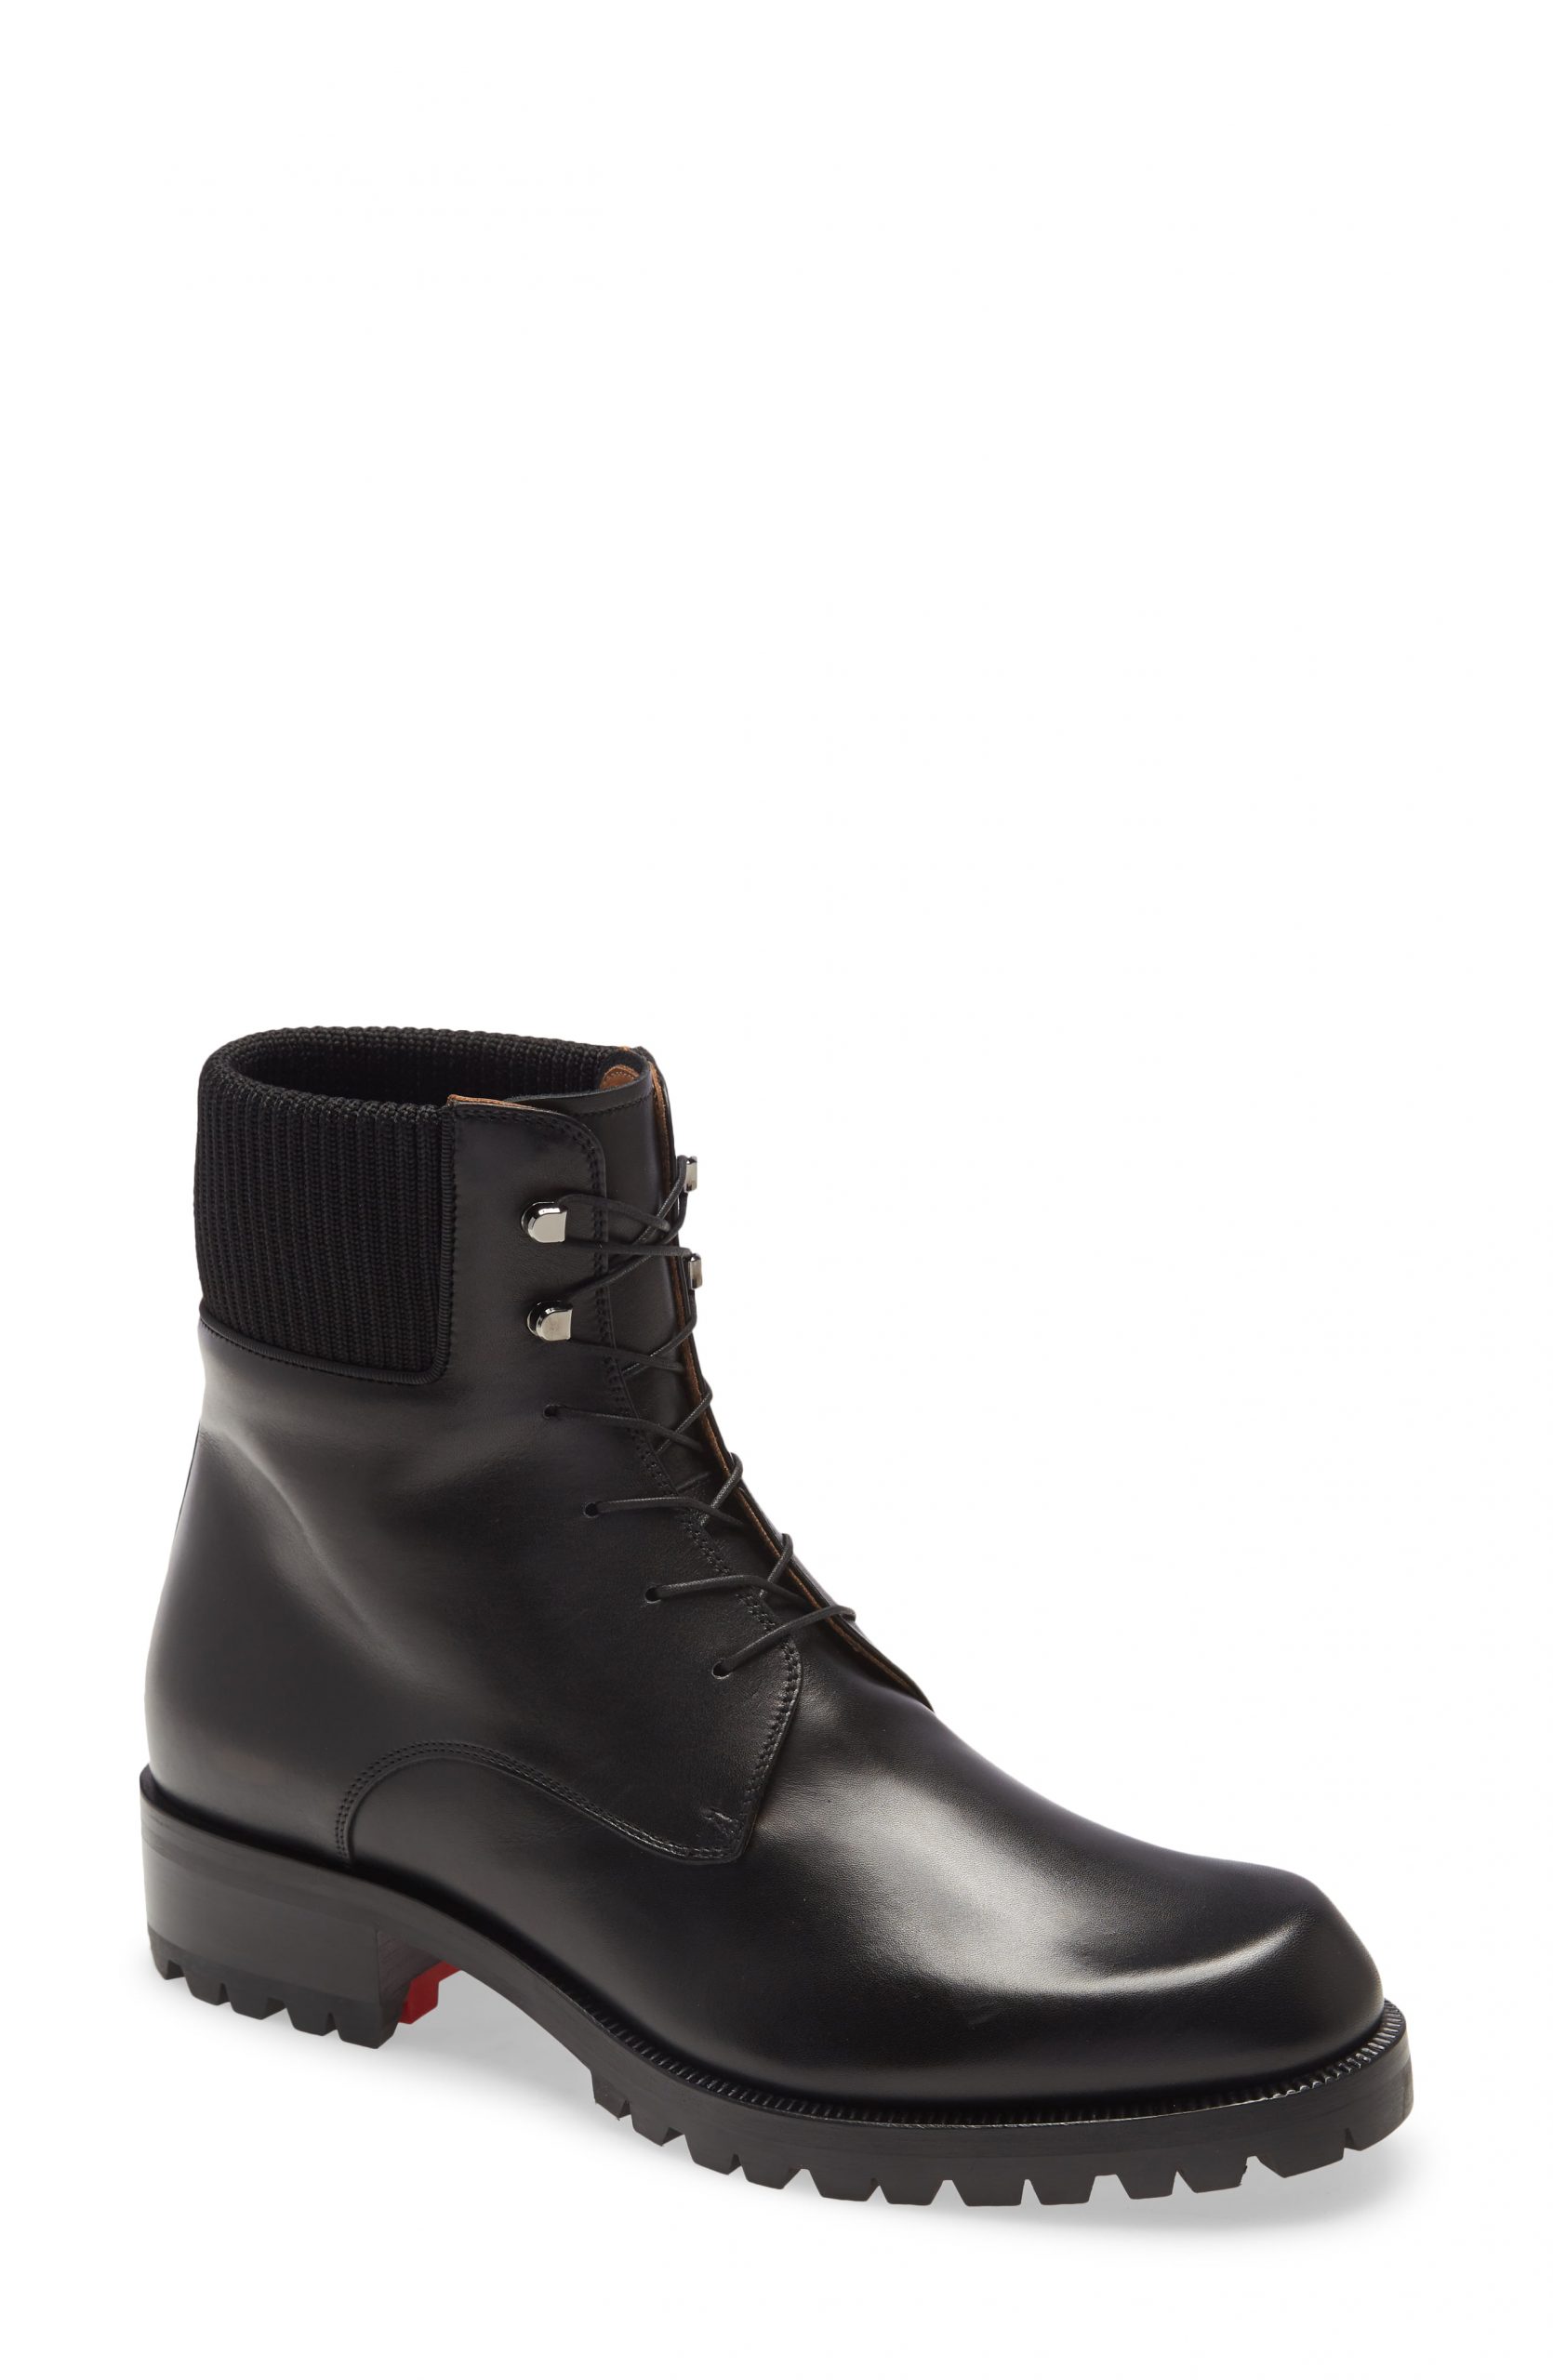 Men's Louboutin Trapman Hiking Boot, Size 39 - Black | Fashion Gone Rogue